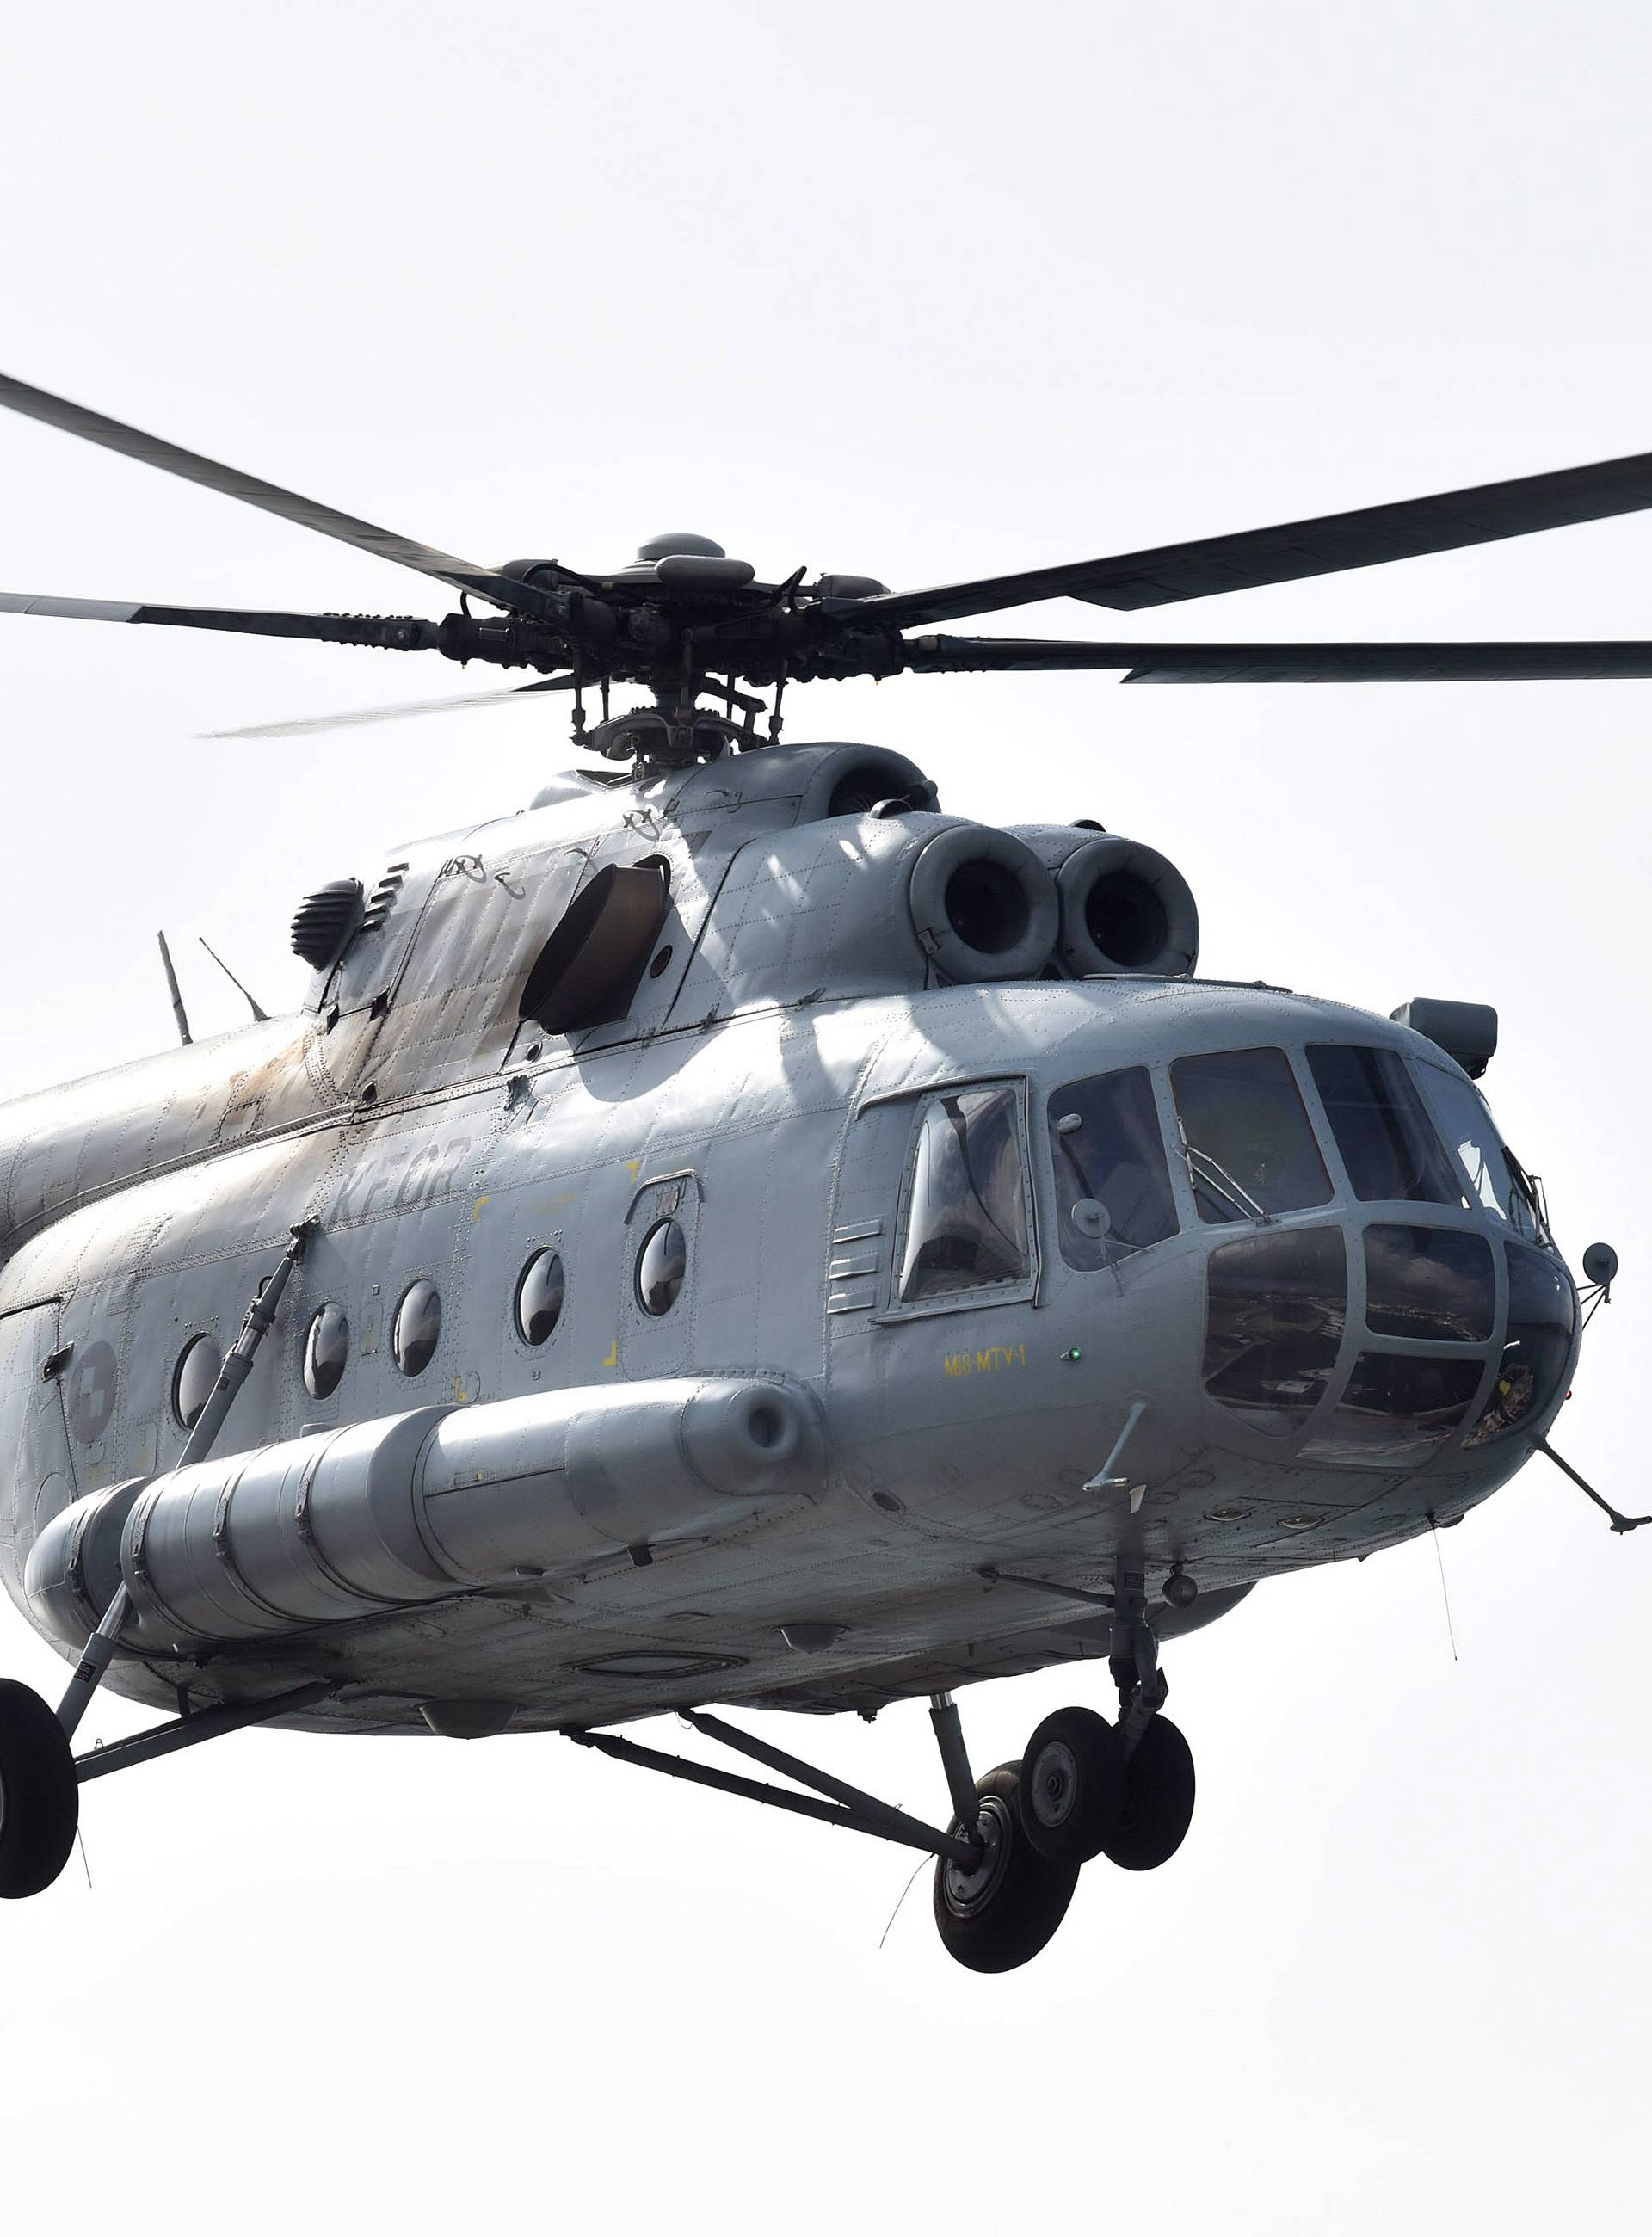 Pilot Marin Klarin poginuo je u padu helikoptera kod Šibenika